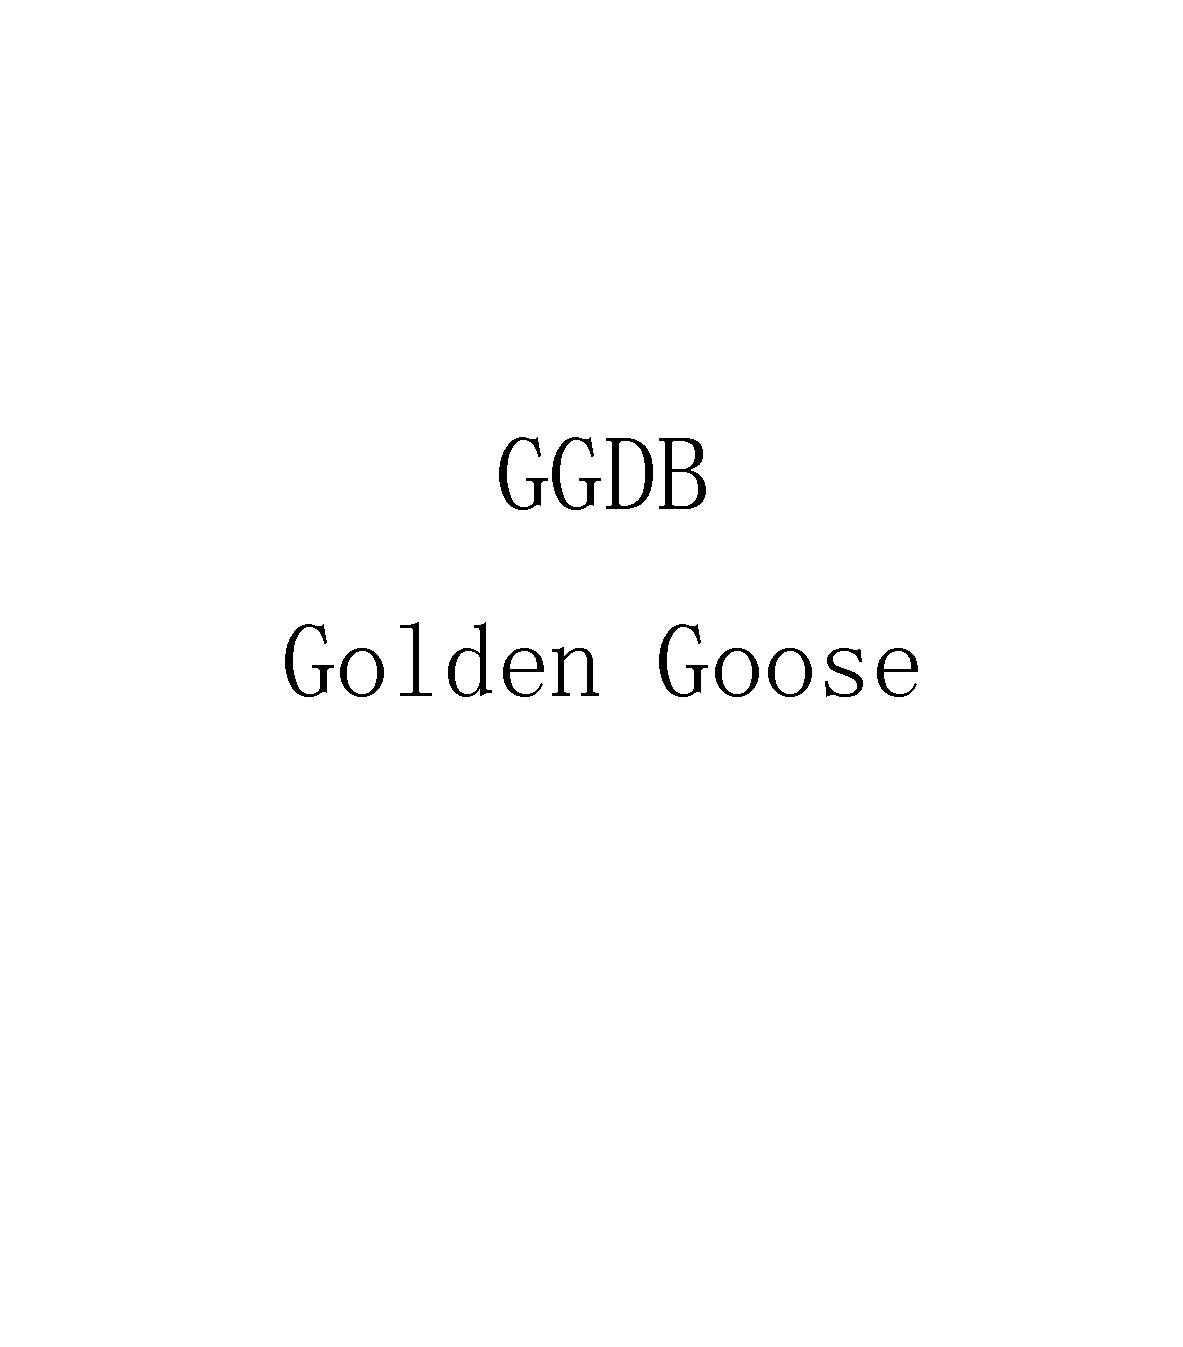 GGDB GOLDEN GOOSE多功能锅商标转让费用买卖交易流程